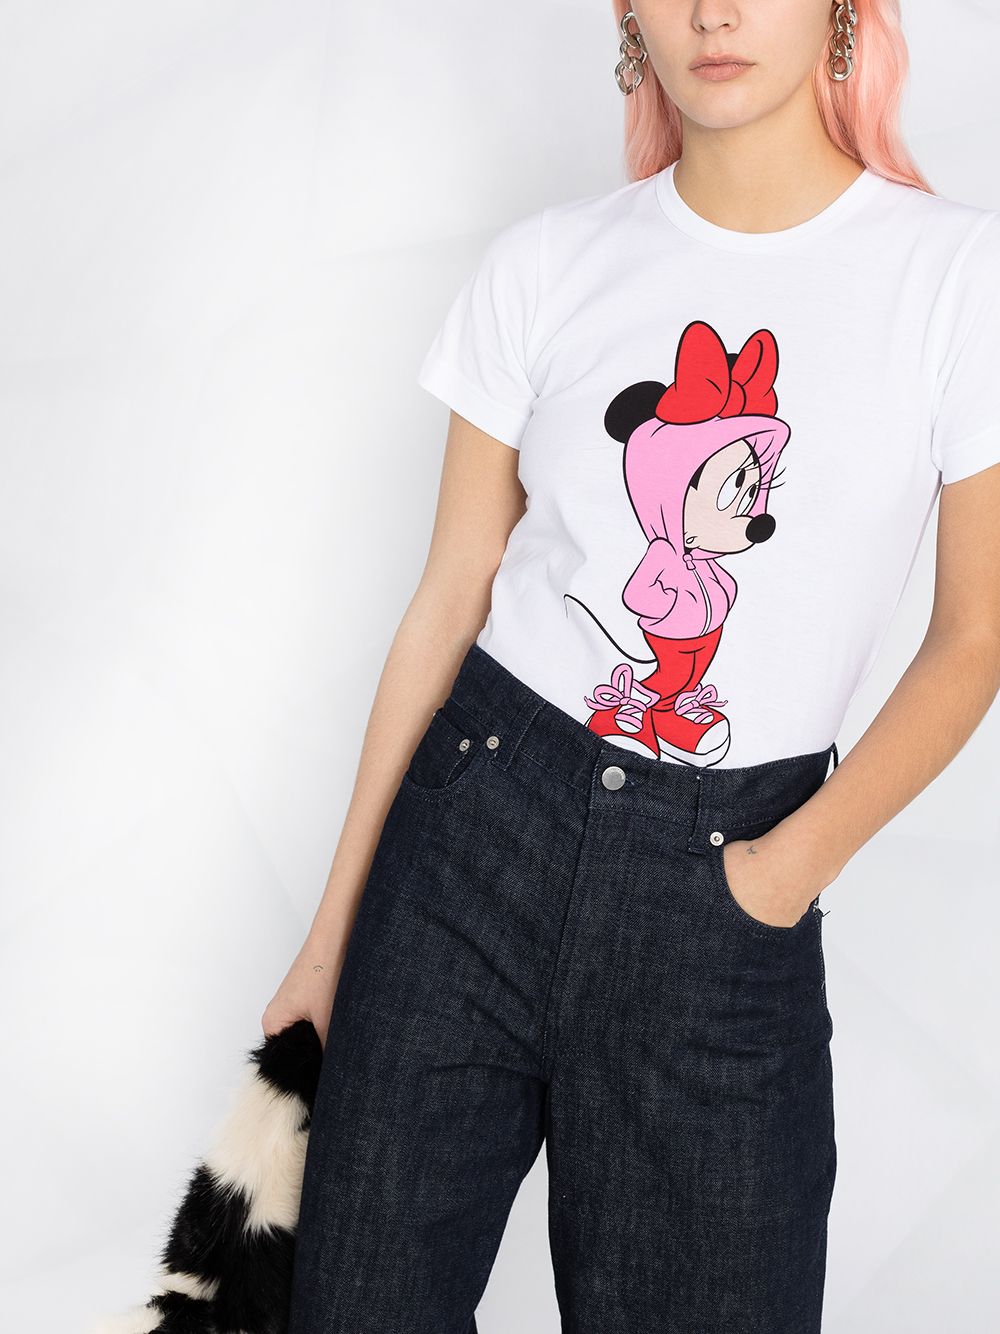 фото Comme des garçons girl футболка minnie mouse с надписью